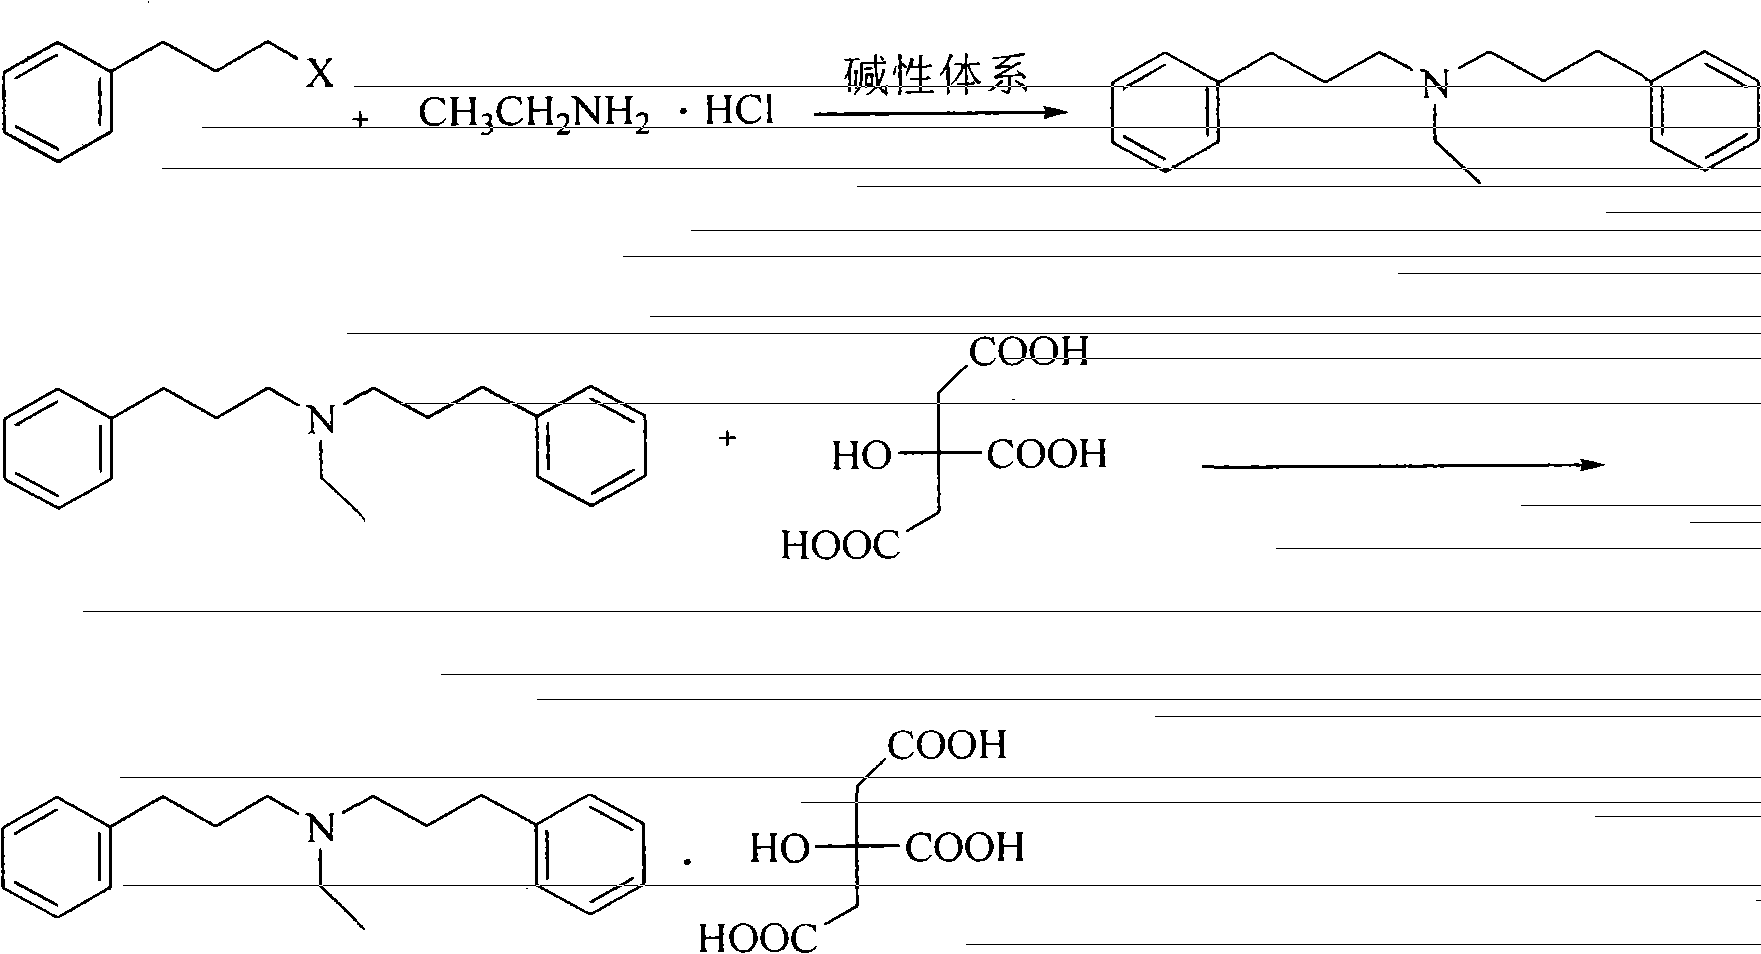 Novel preparation method of alverine citrate